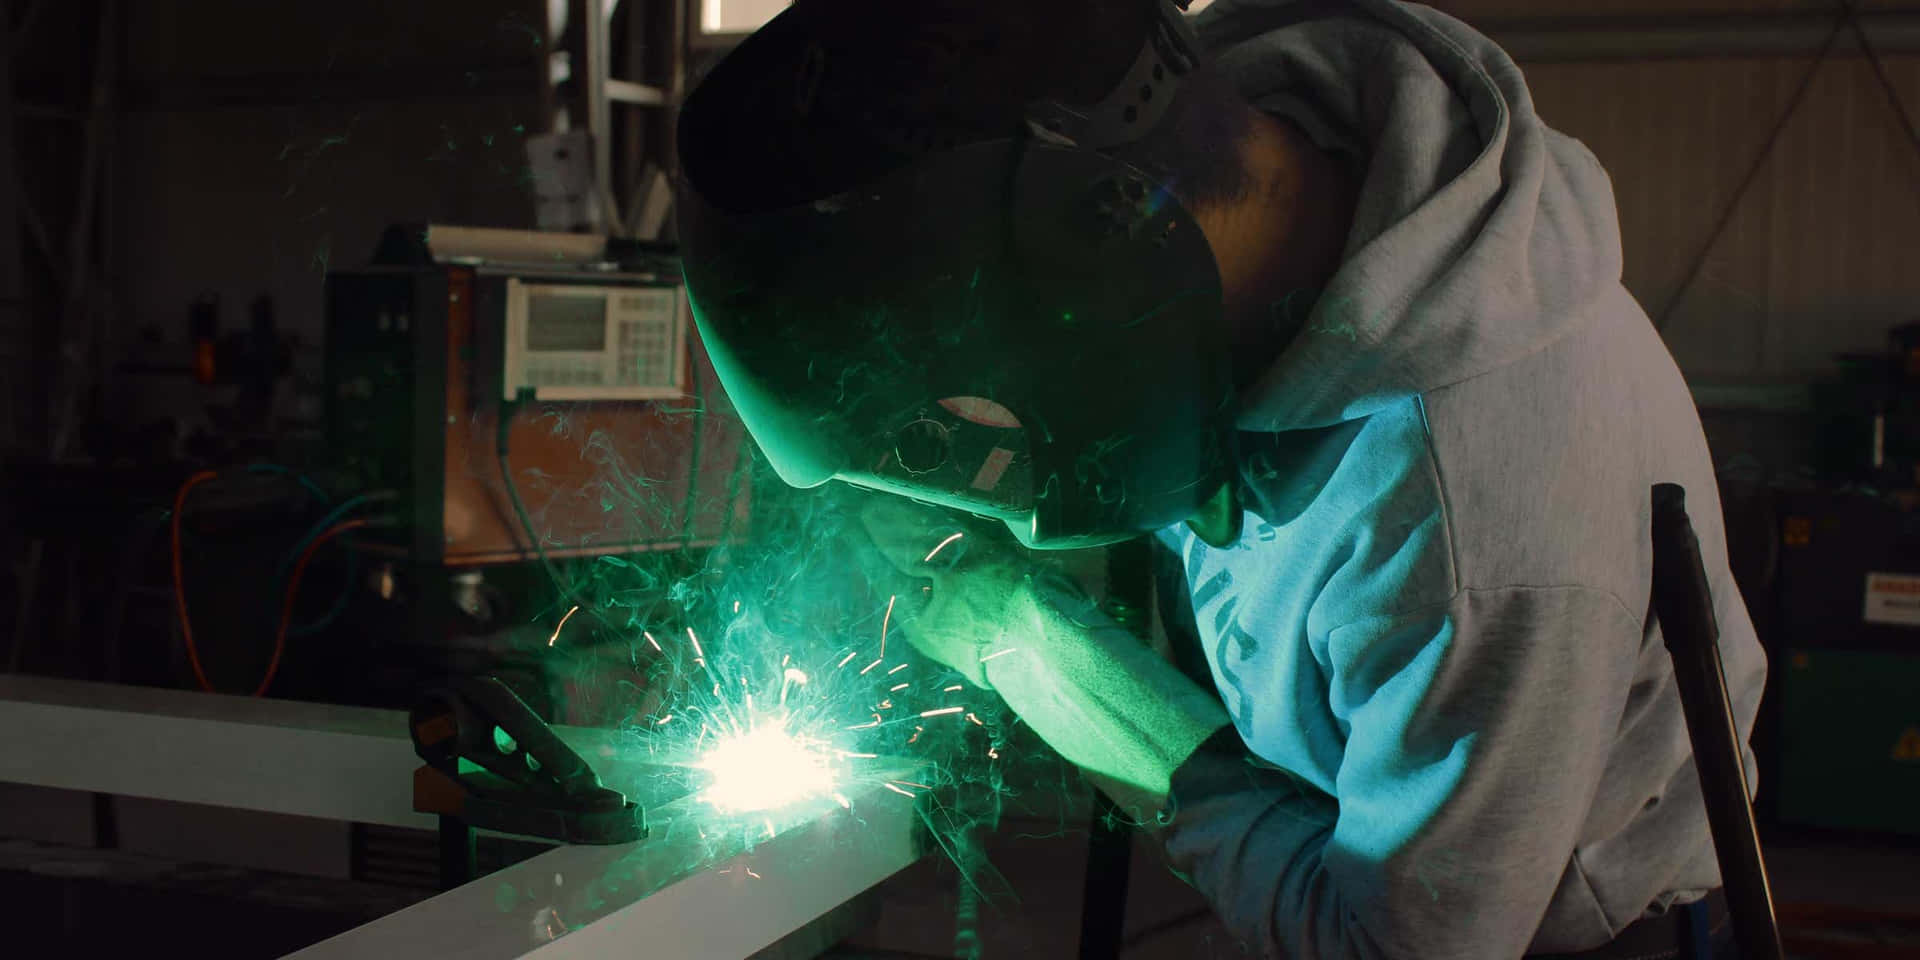 A Man Welding Metal In A Factory